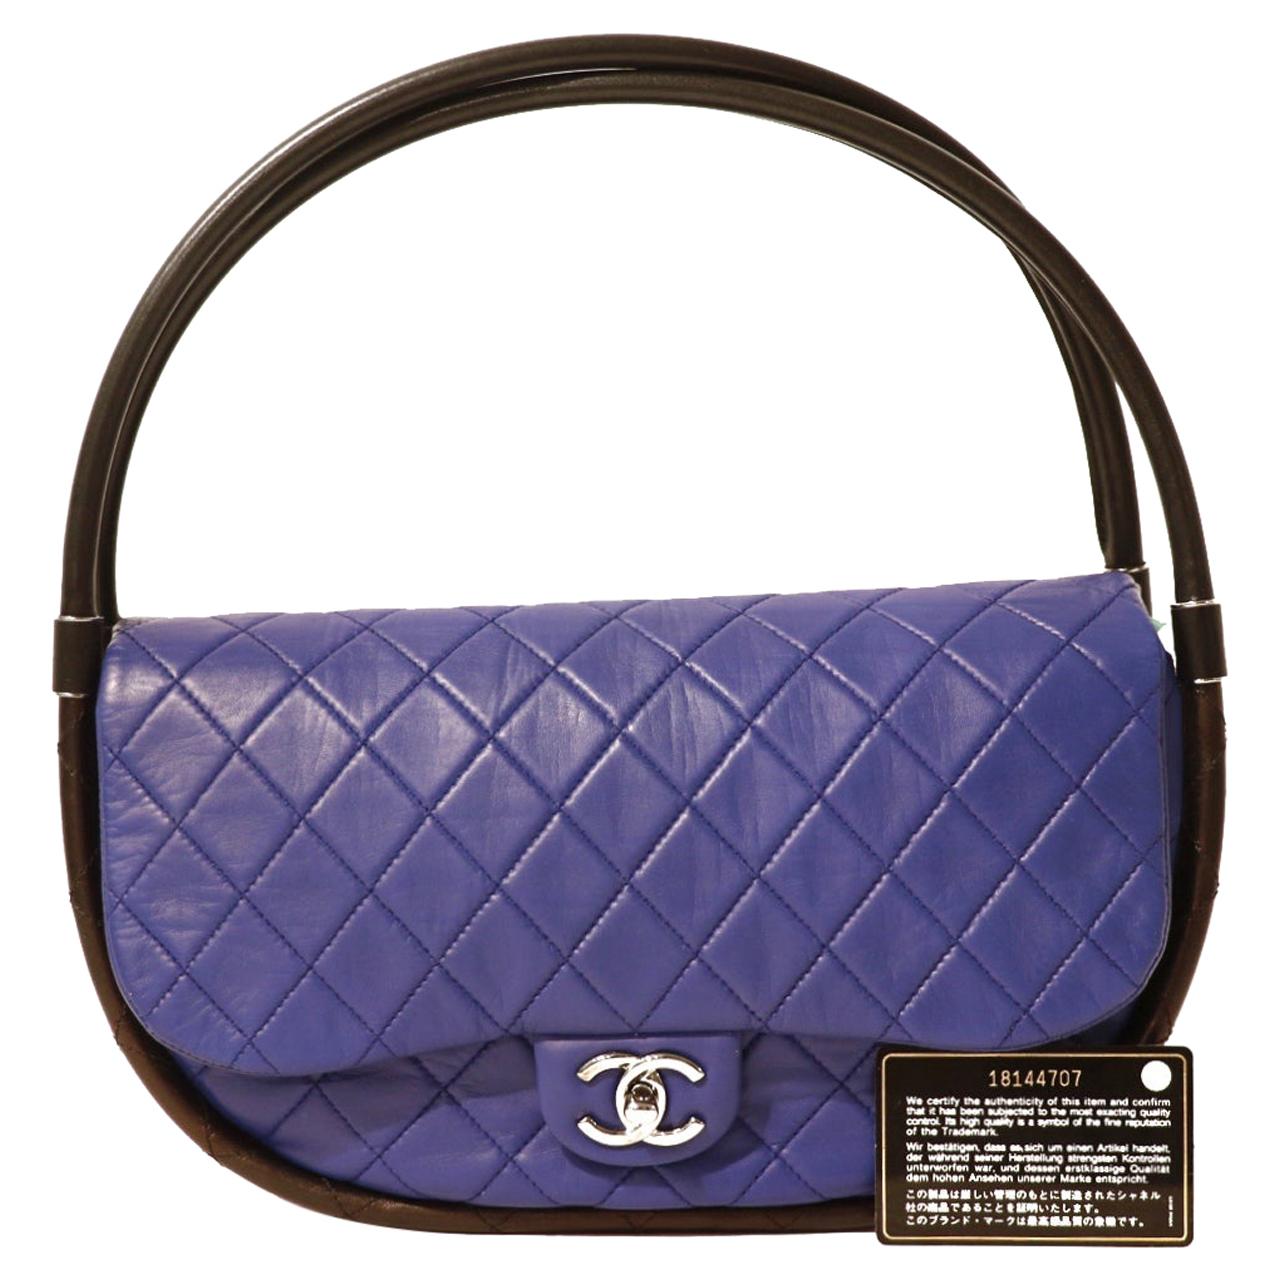 Hula hoop leather handbag Chanel Beige in Leather - 29388033